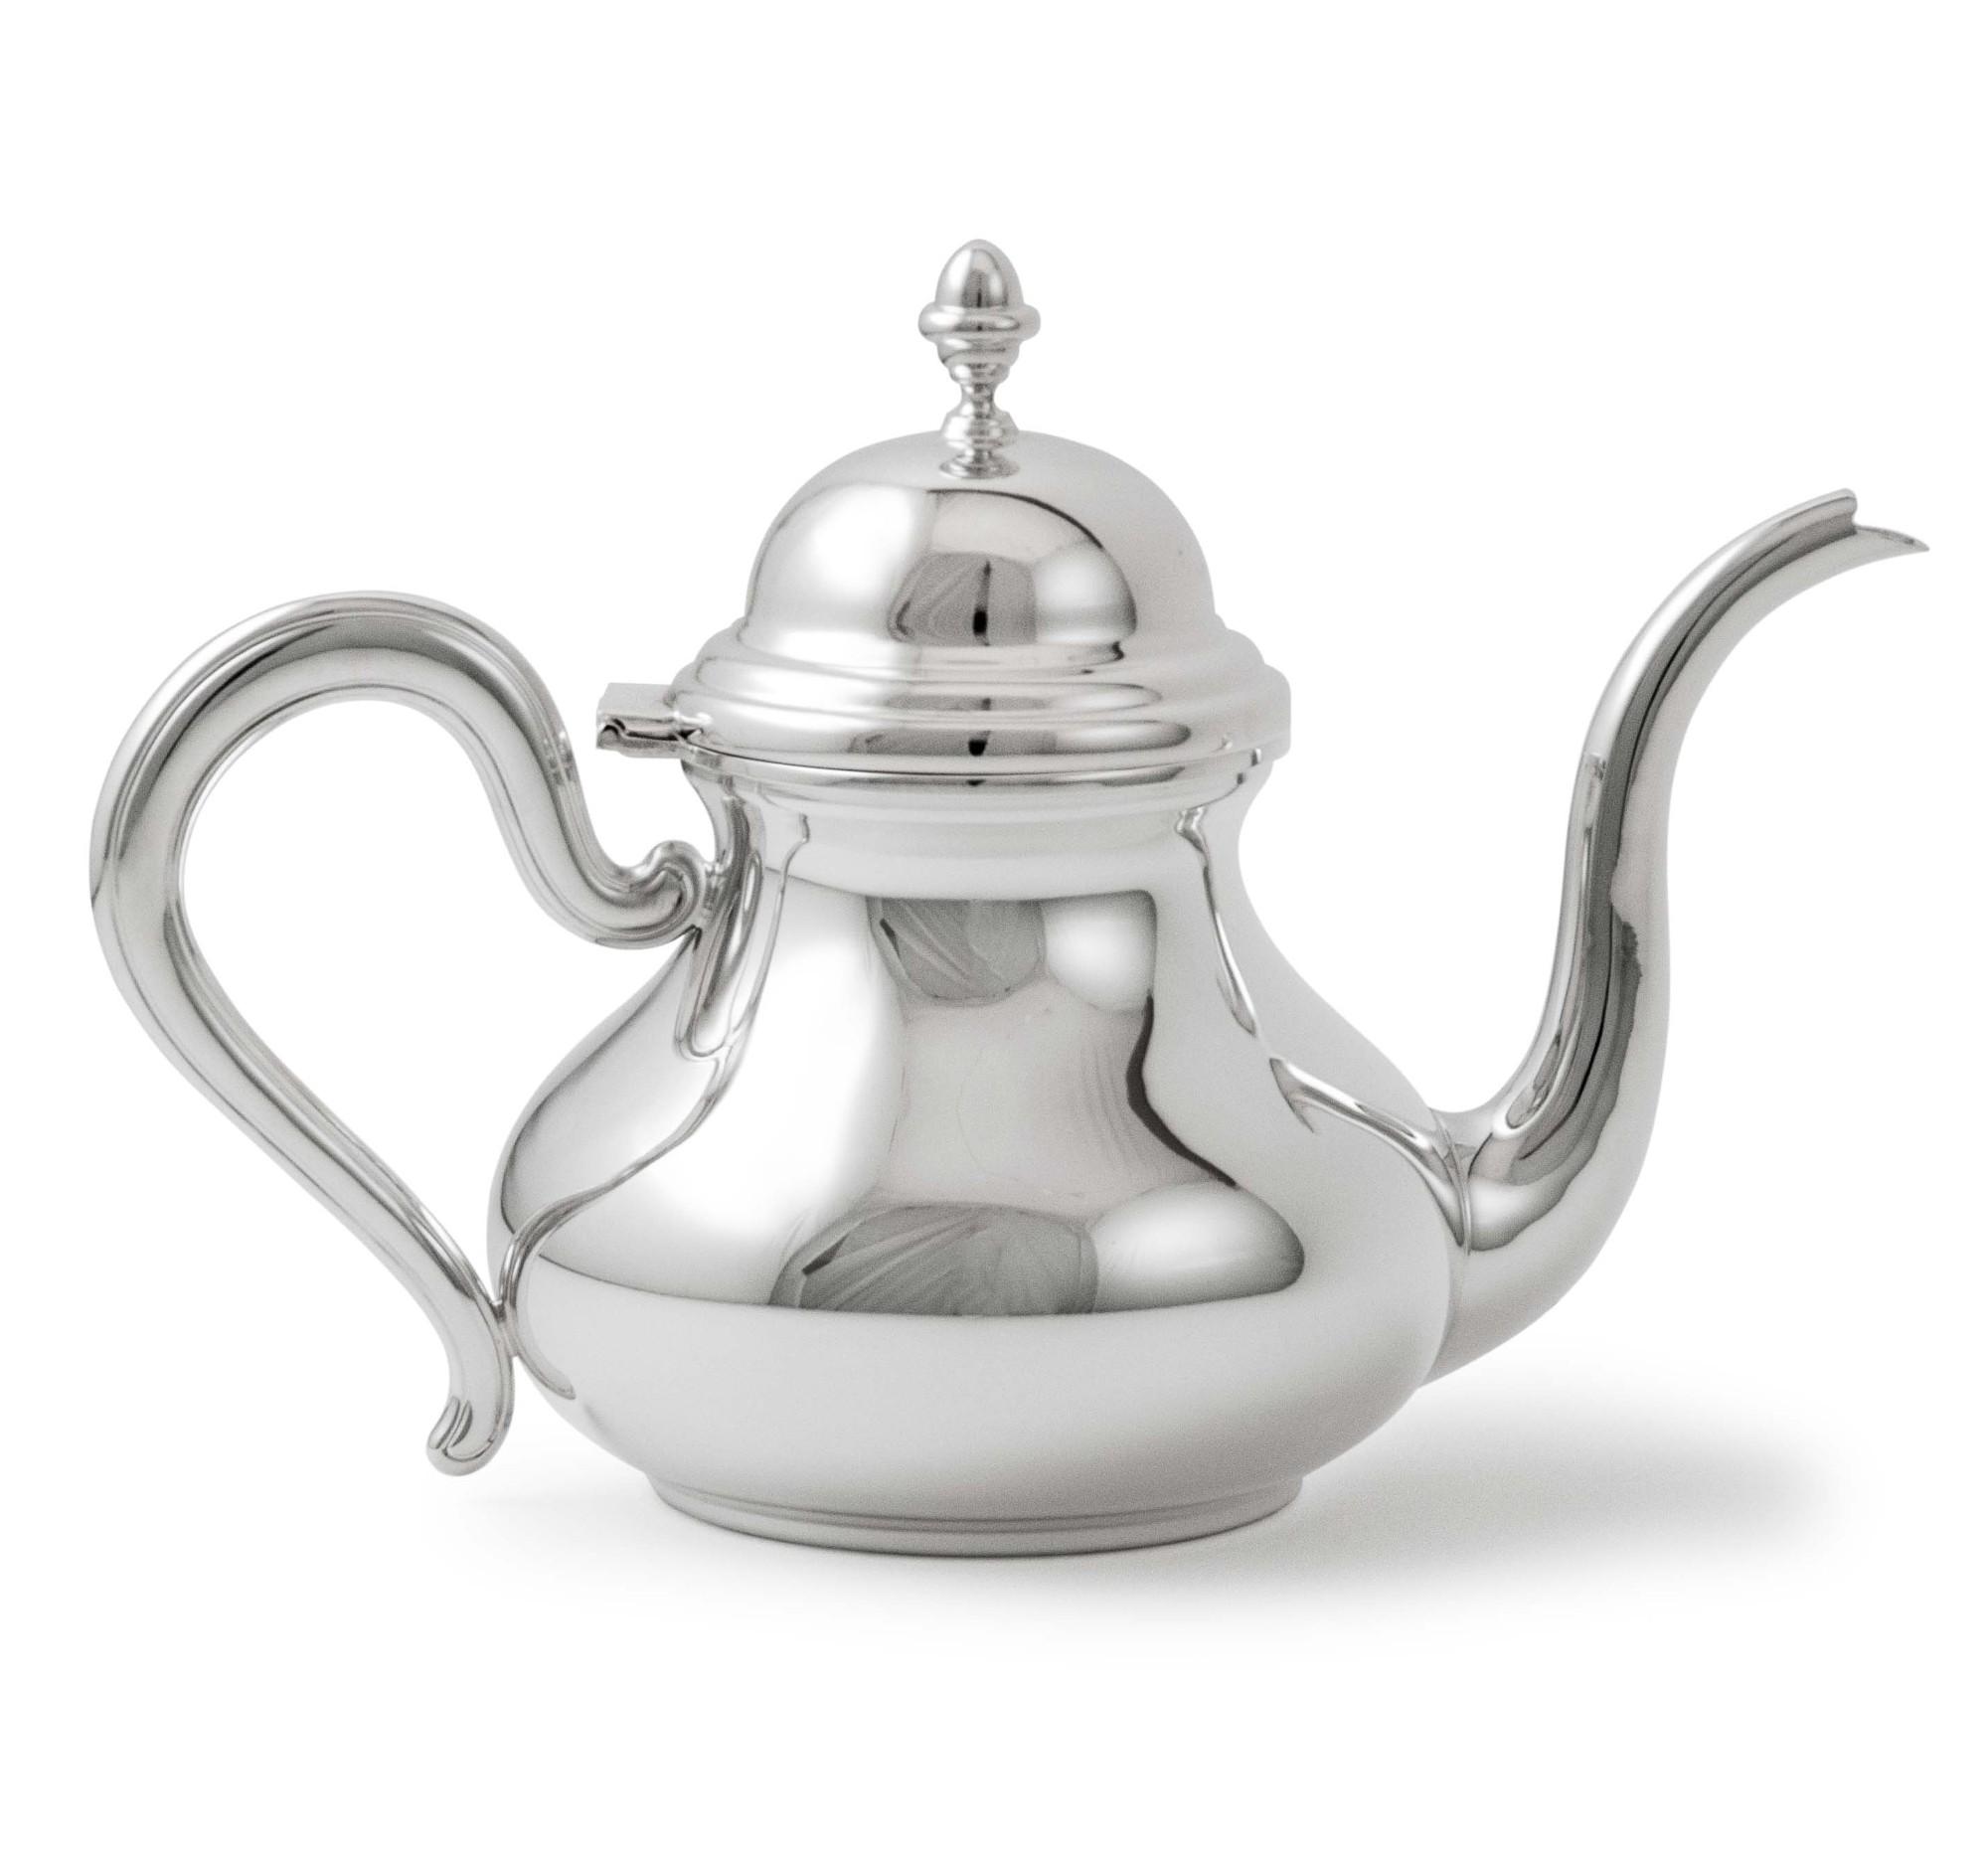 Traditional English Teapot